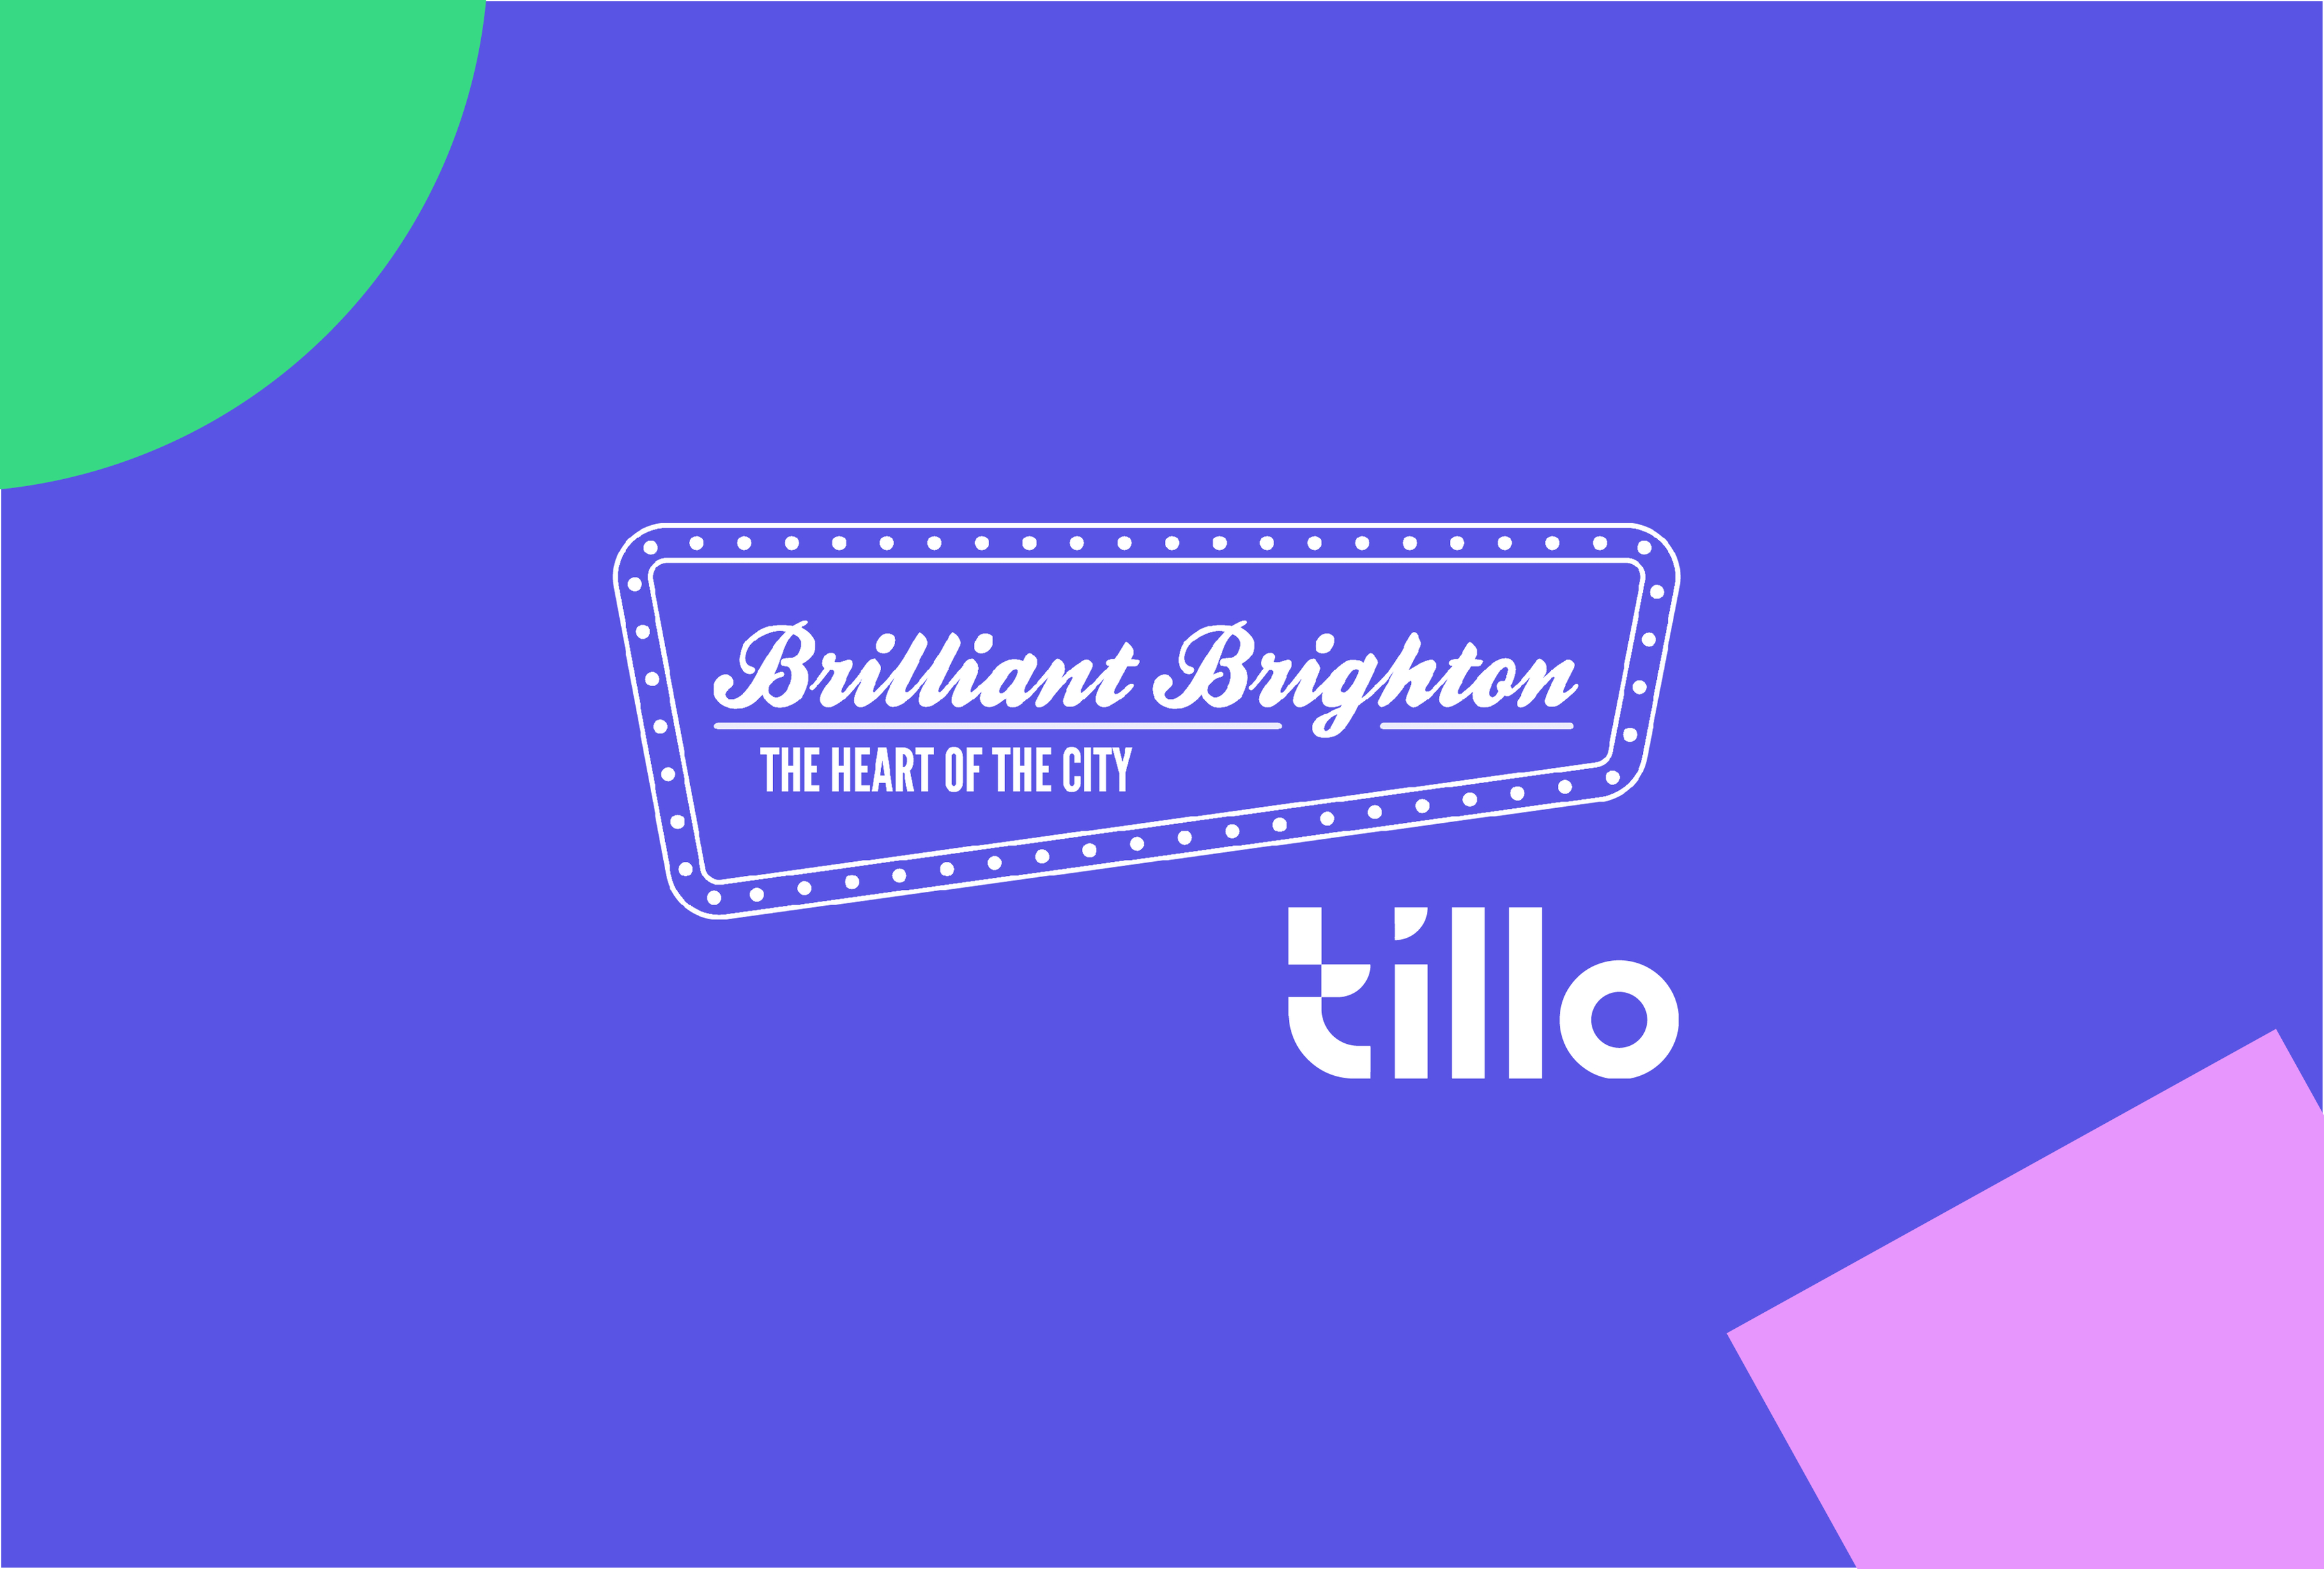 Brighton Gift Card collaboration between Tillo and Brilliant Brighton 